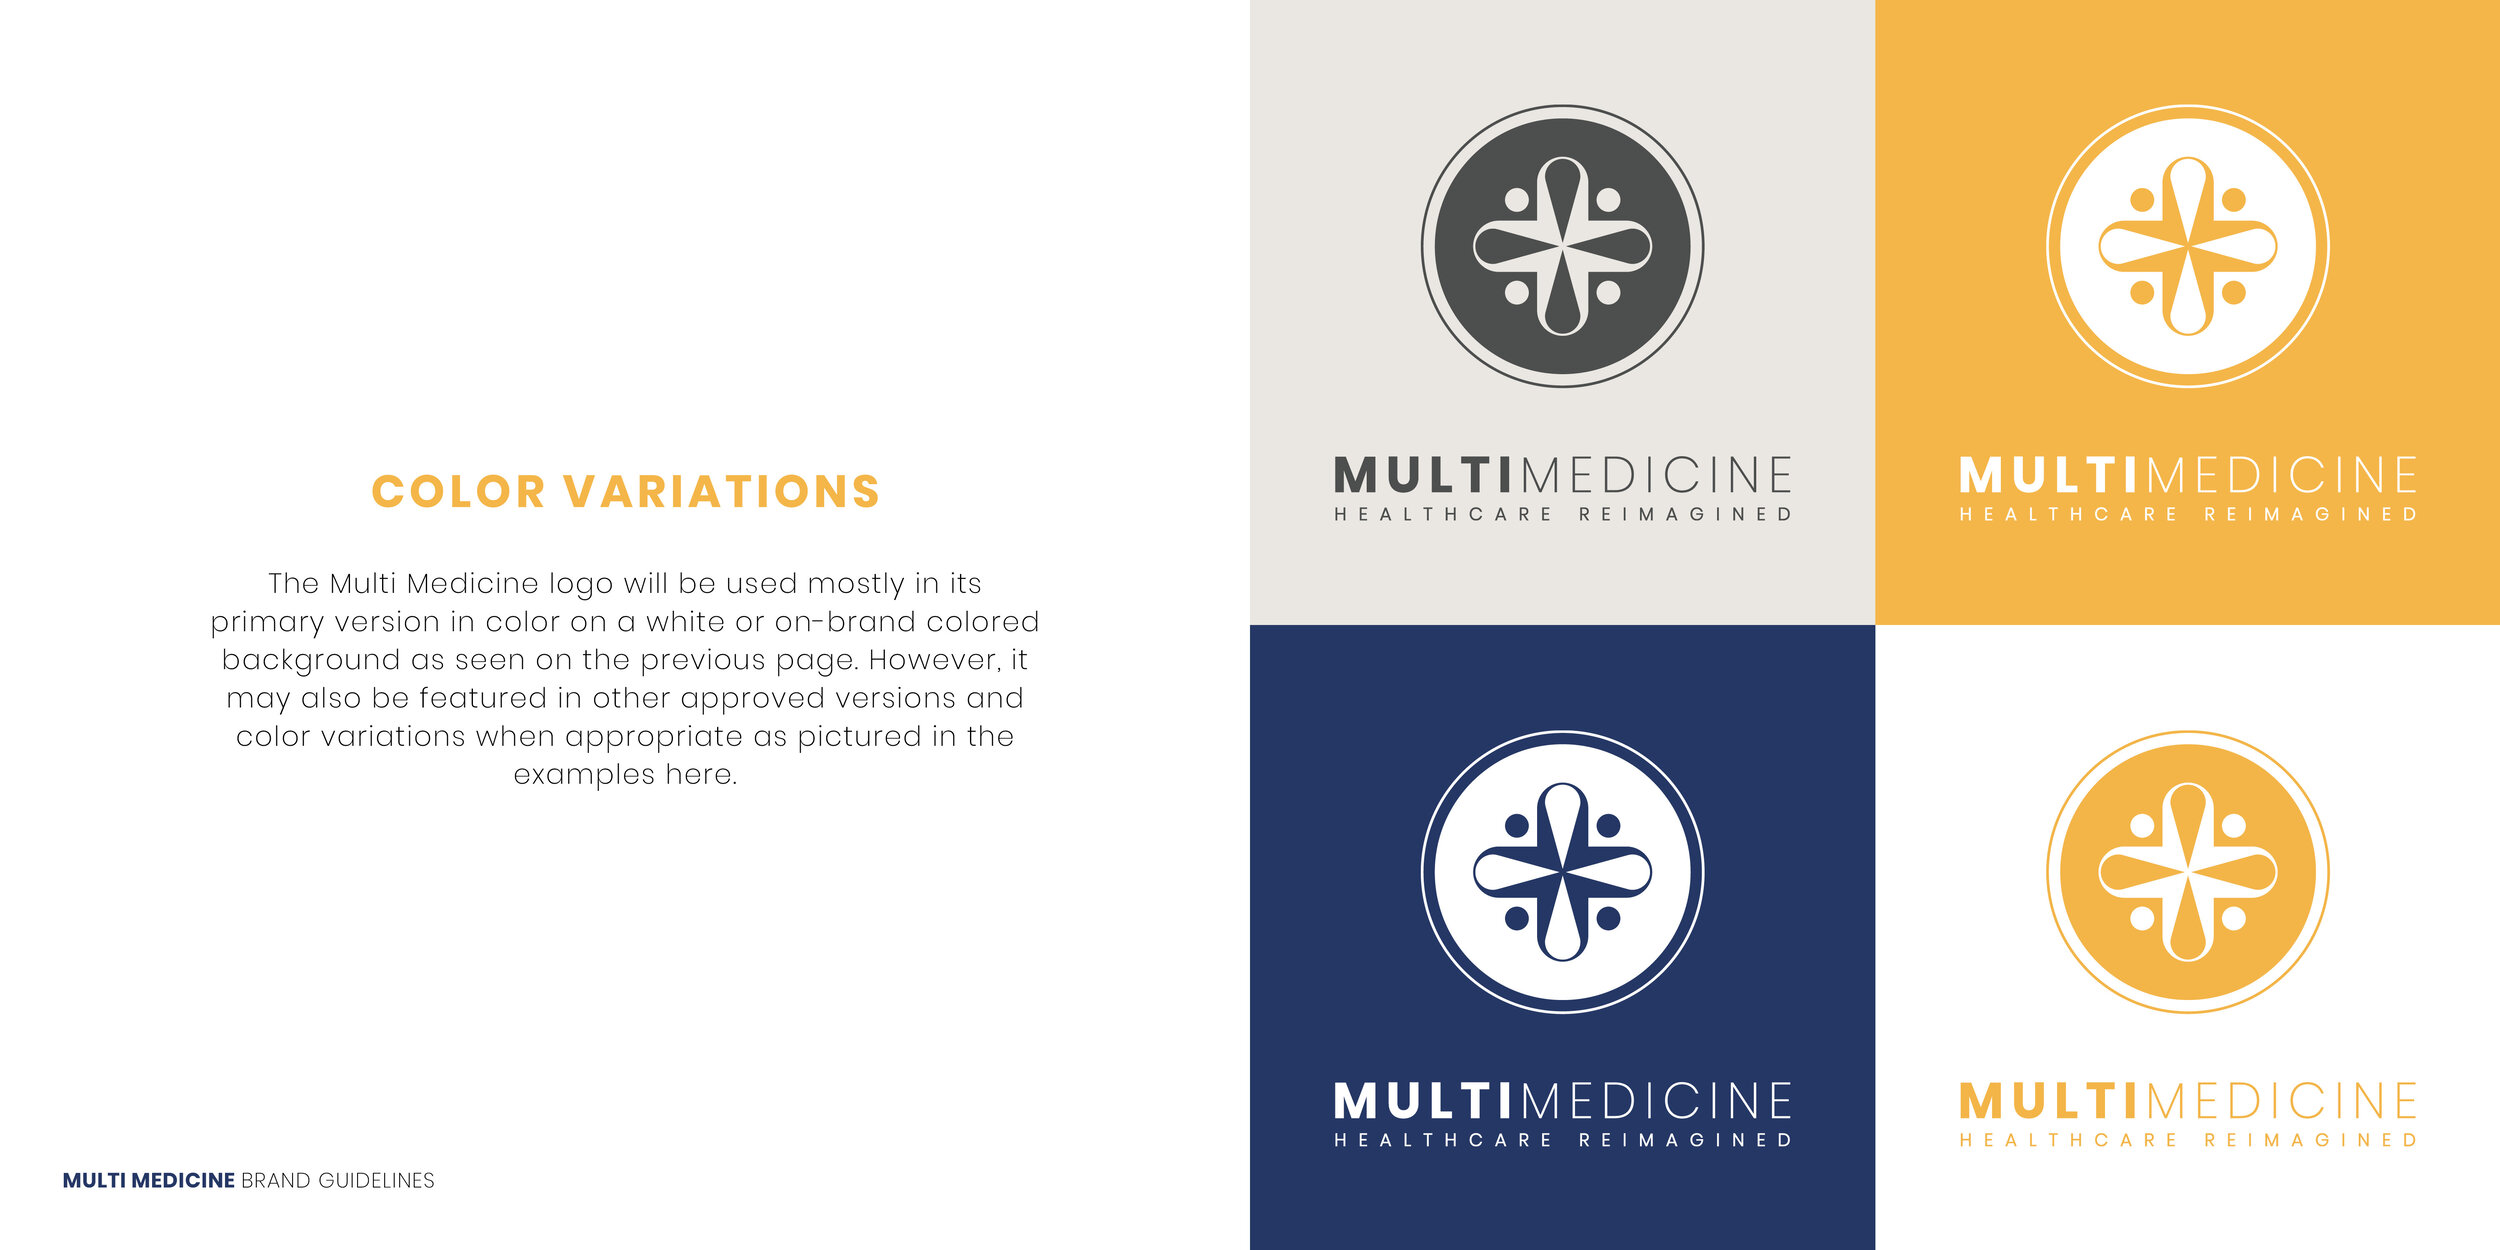 Multi Medicine Brand Style Guide8.jpg